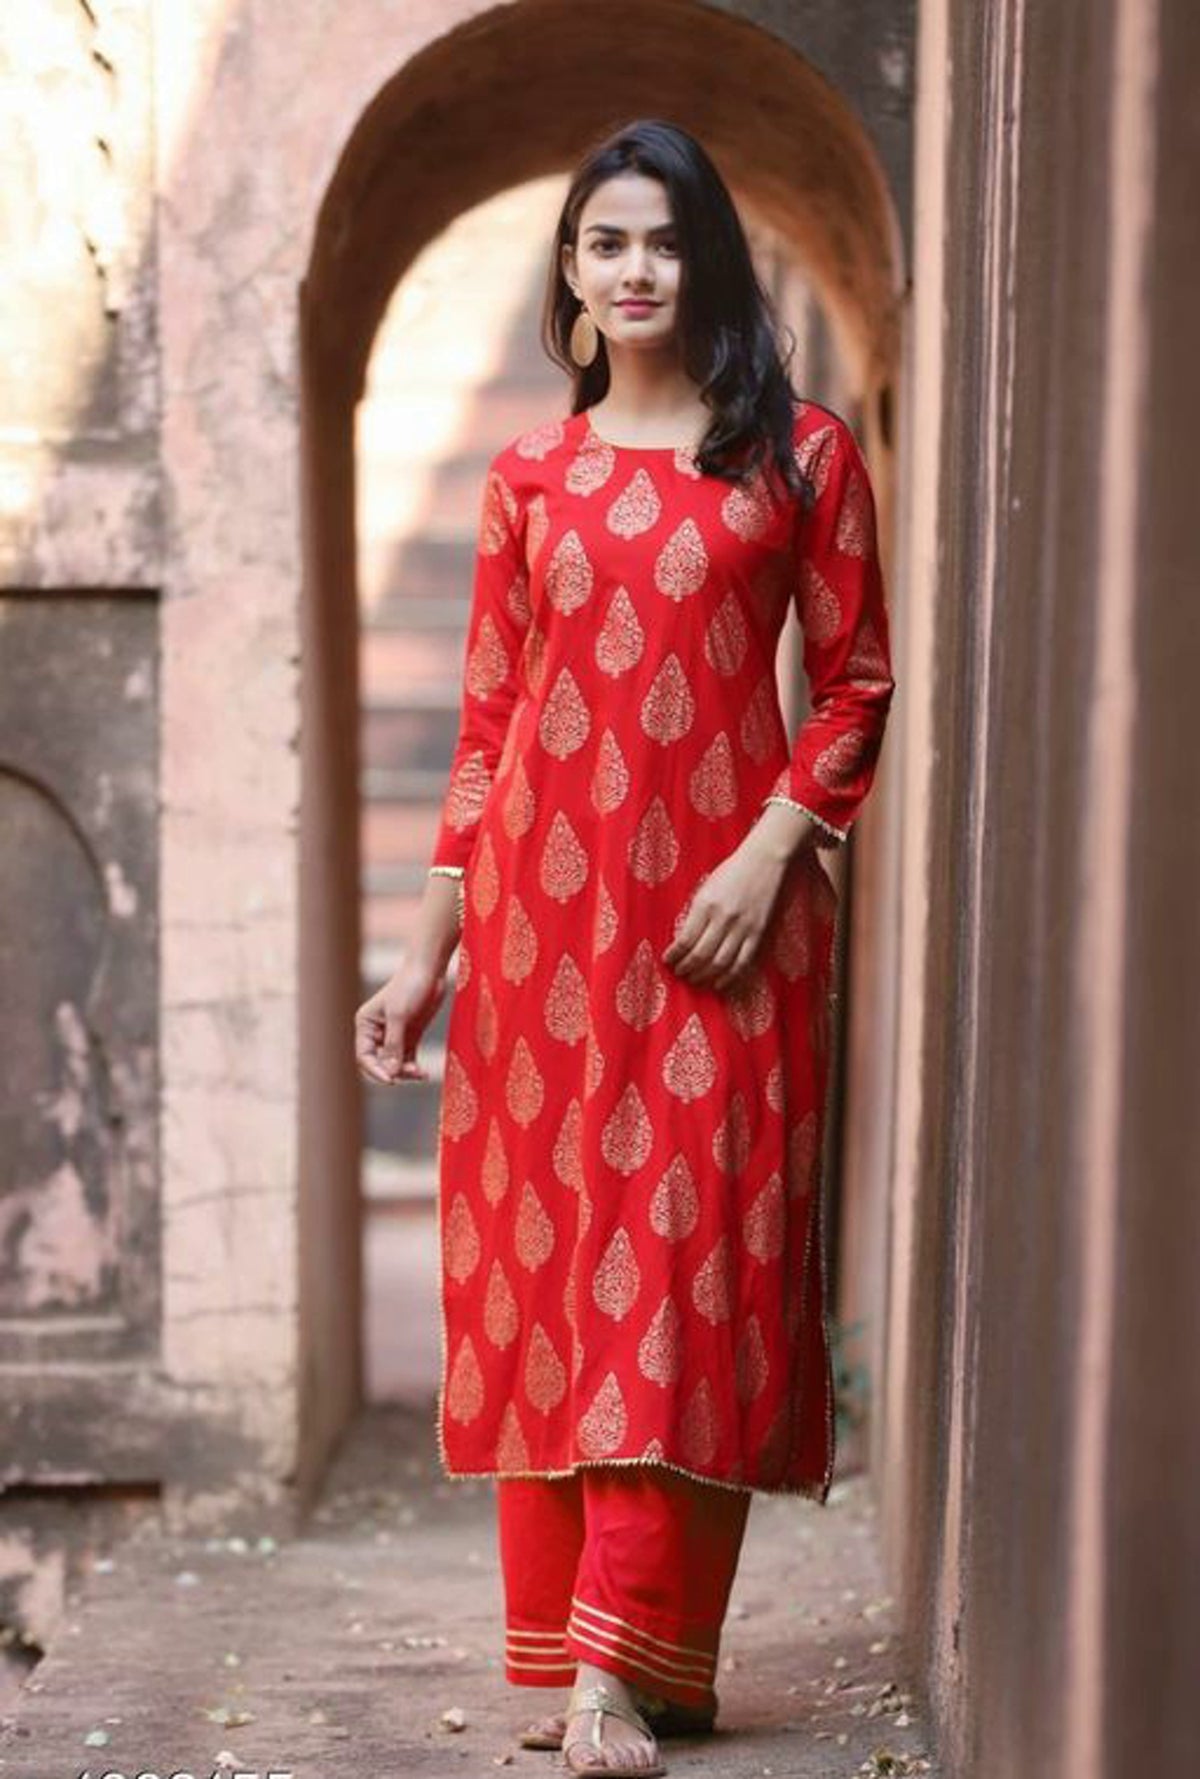 Indian Women Red & Golden Foil Print Kurta Kurti Top Tunic Dress New style  | eBay